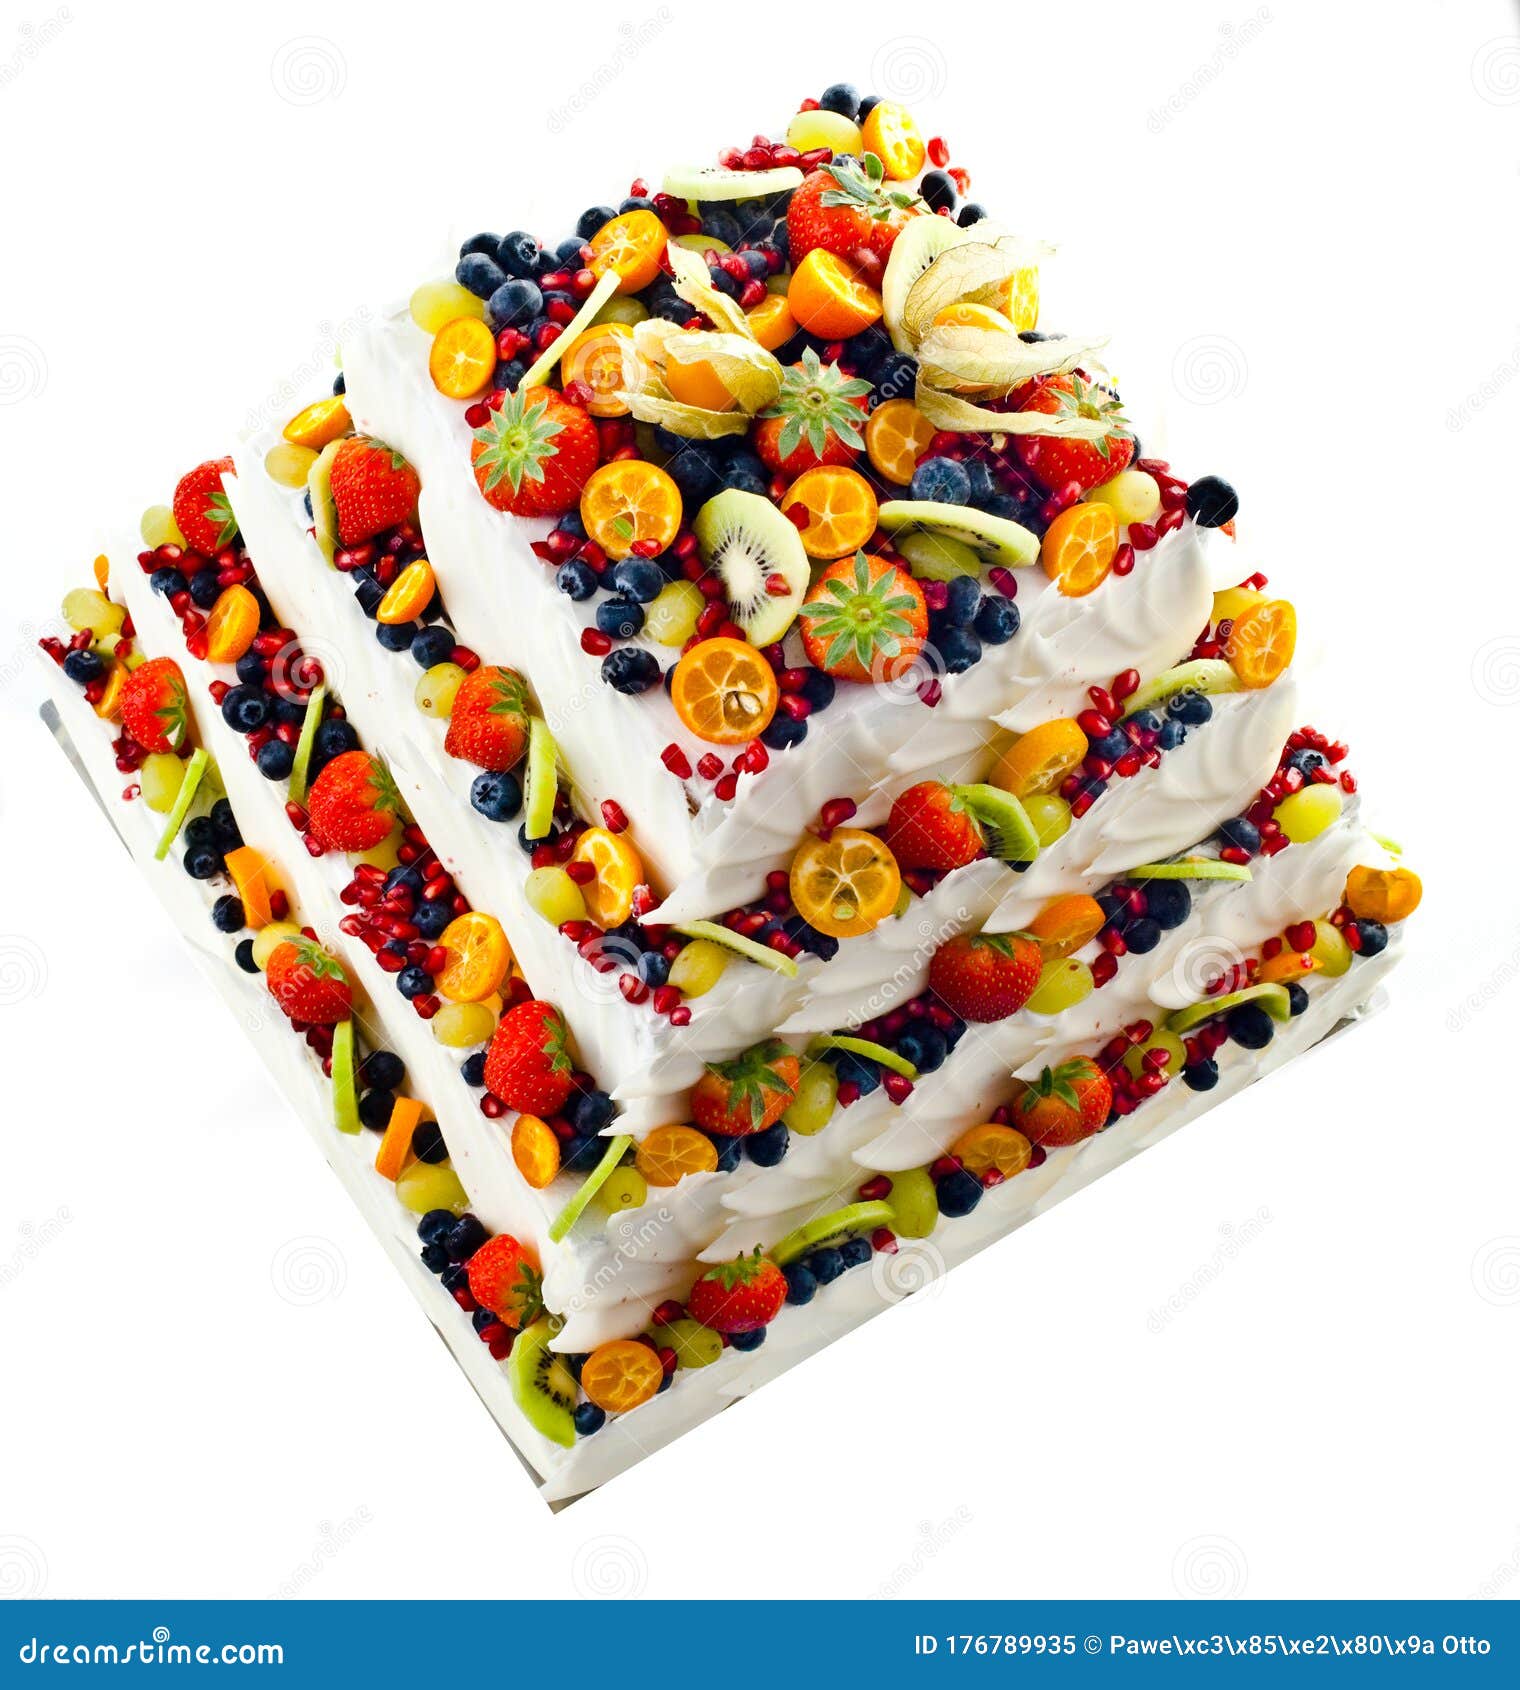 Fruit Cake Elite - Elite Cakes American Style - Italian Frozen Dessert -  Desserts Dolcefreddo Moralberti